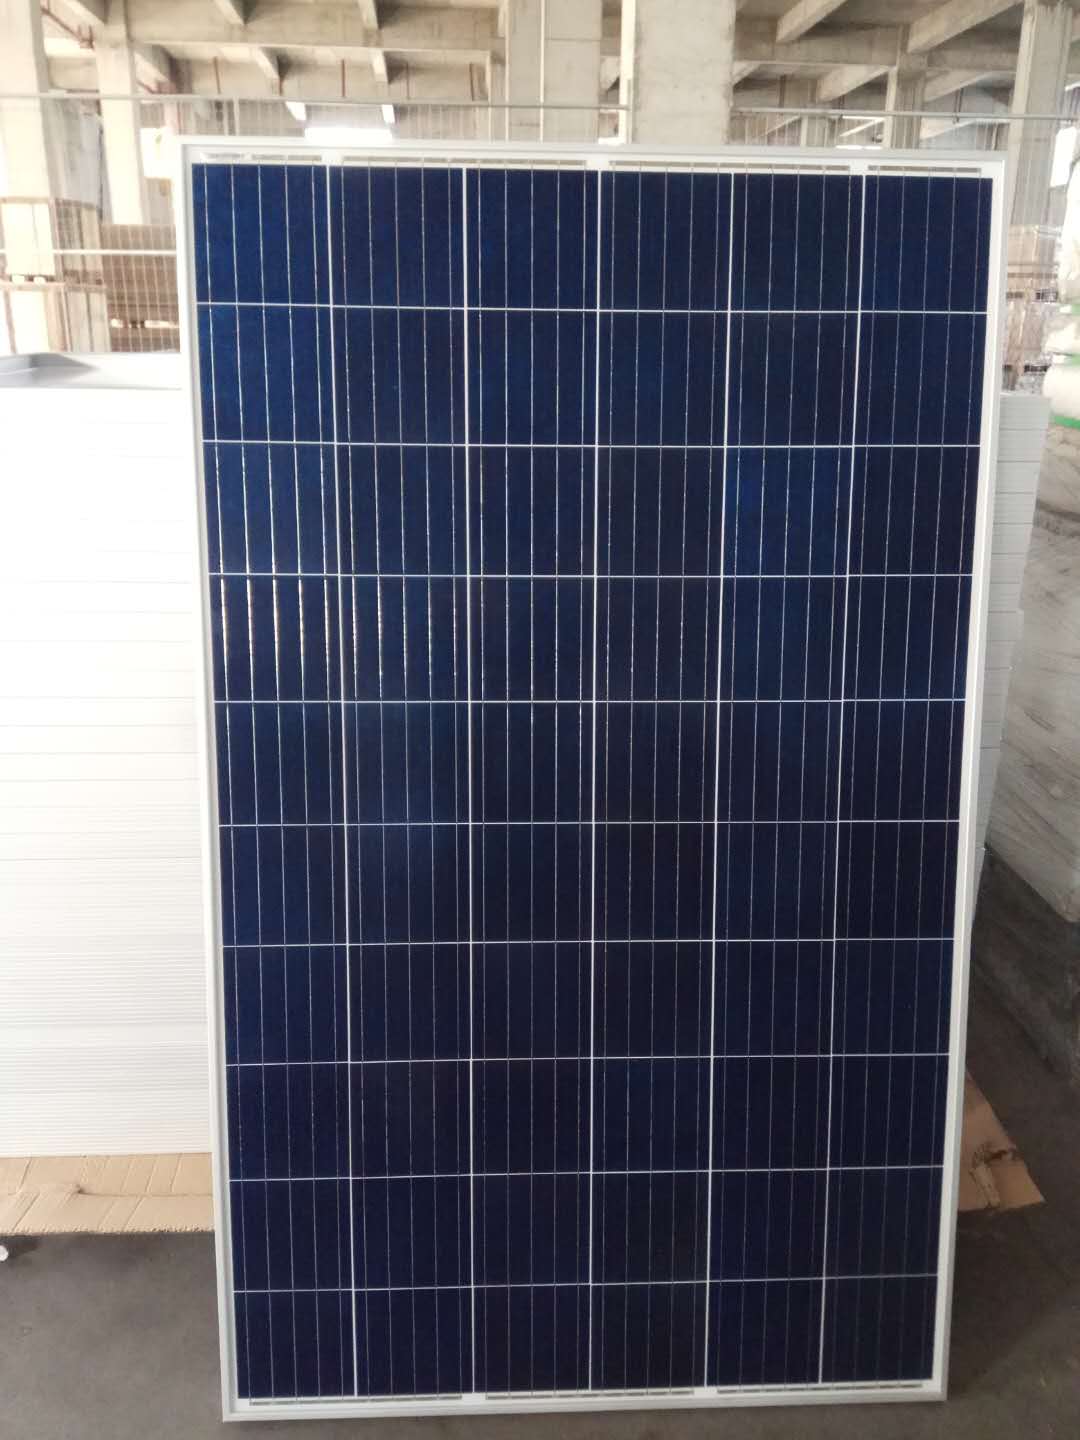 zocen polycrystalline solar panel 1640x992